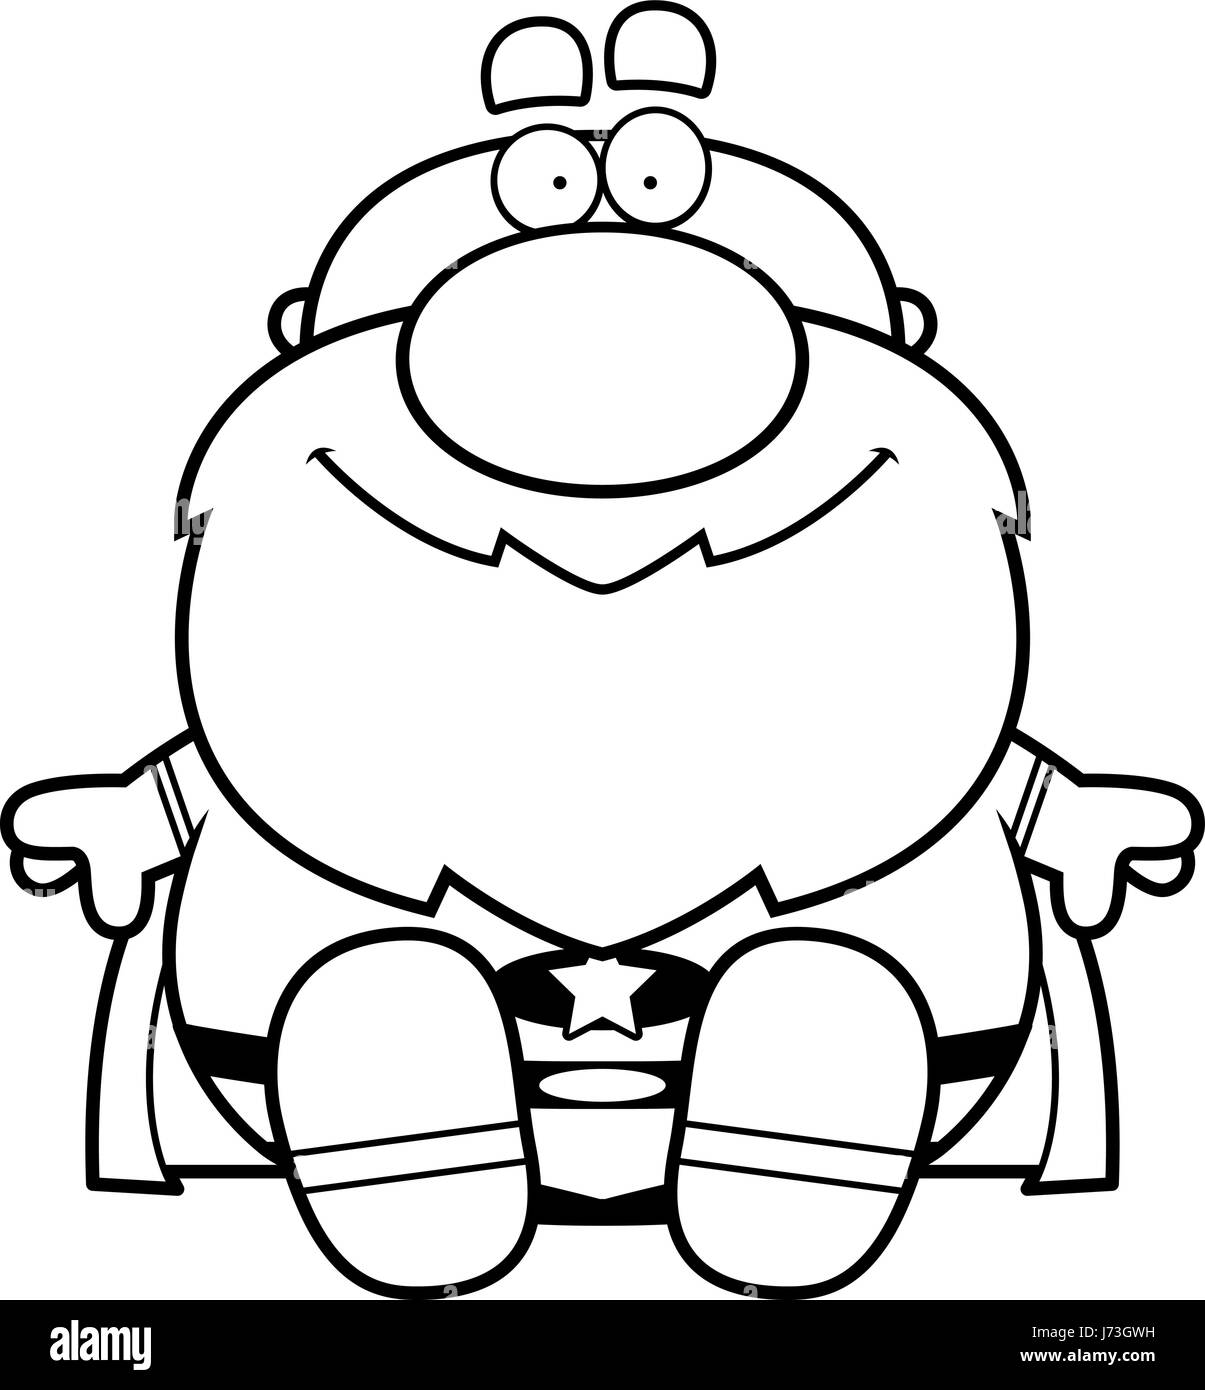 A cartoon illustration of a superhero sitting. Stock Vector